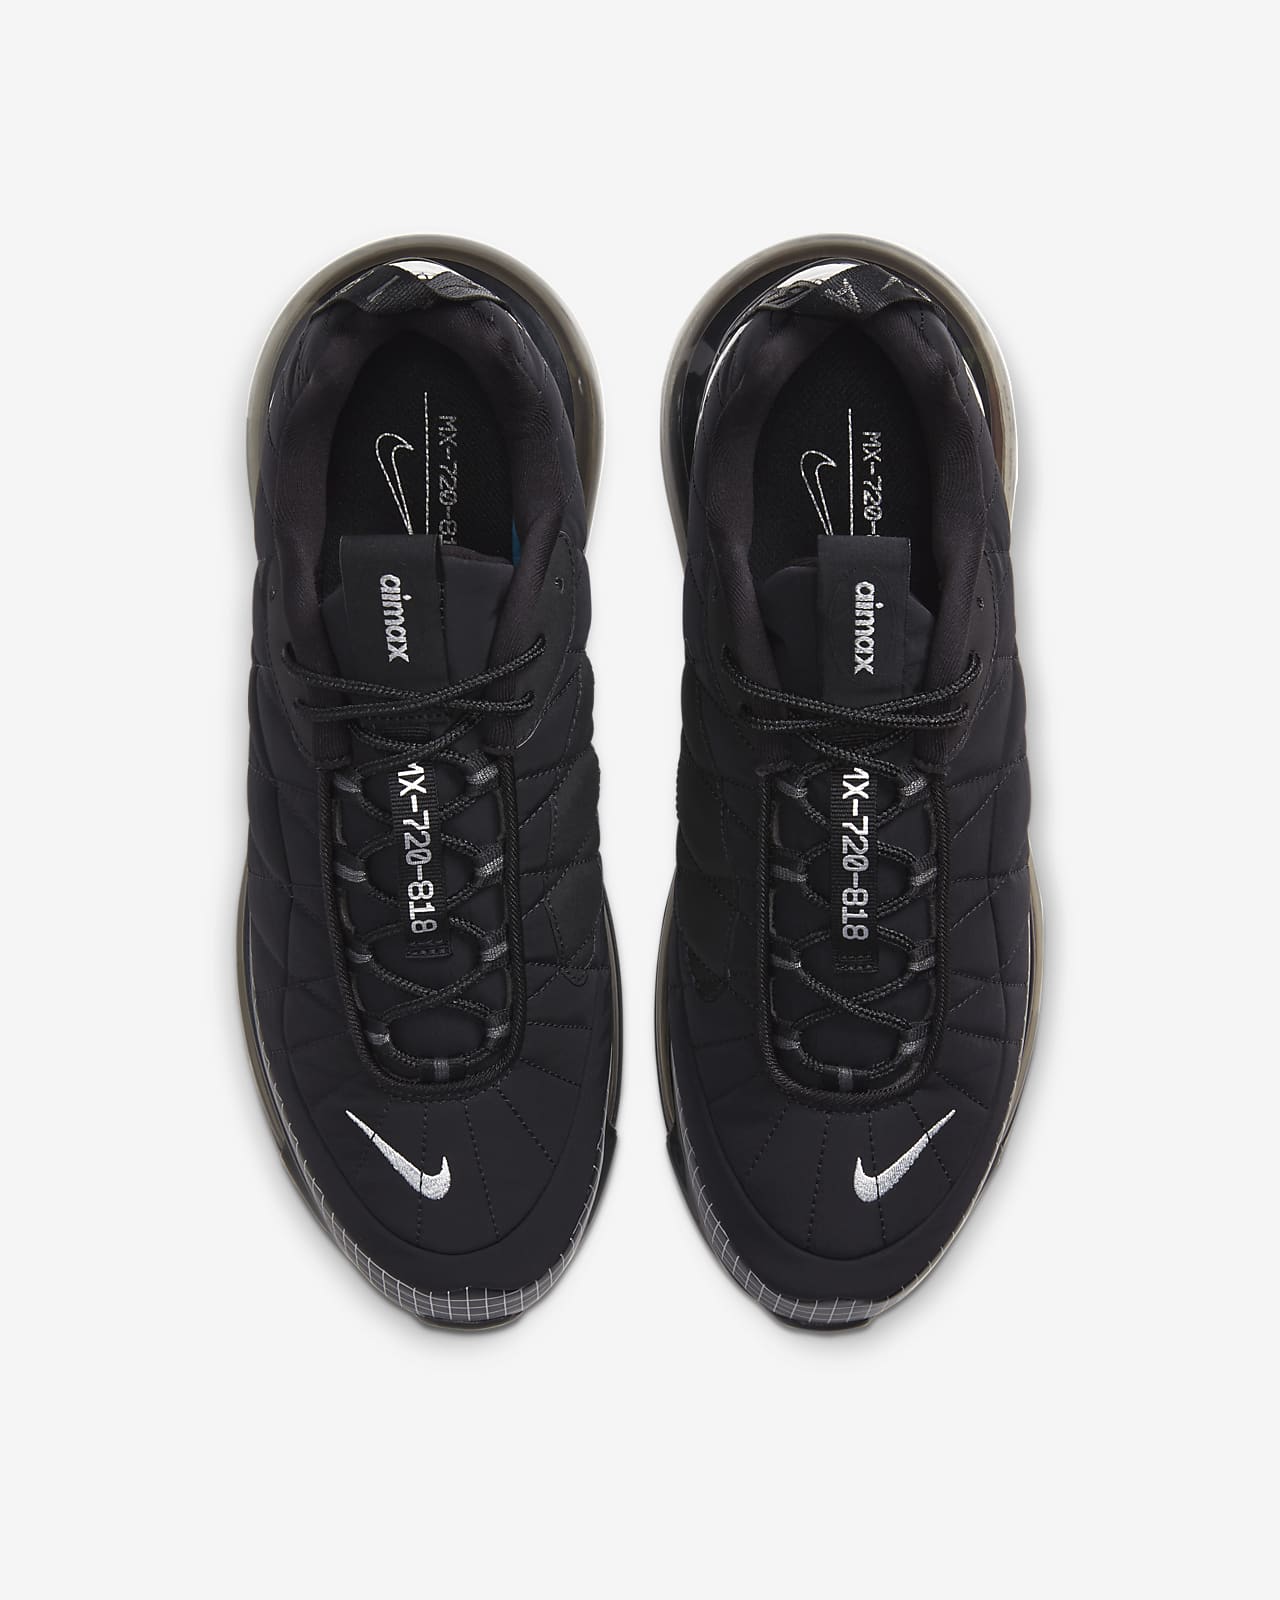 Nike Air Max 720-818 trainers in triple black